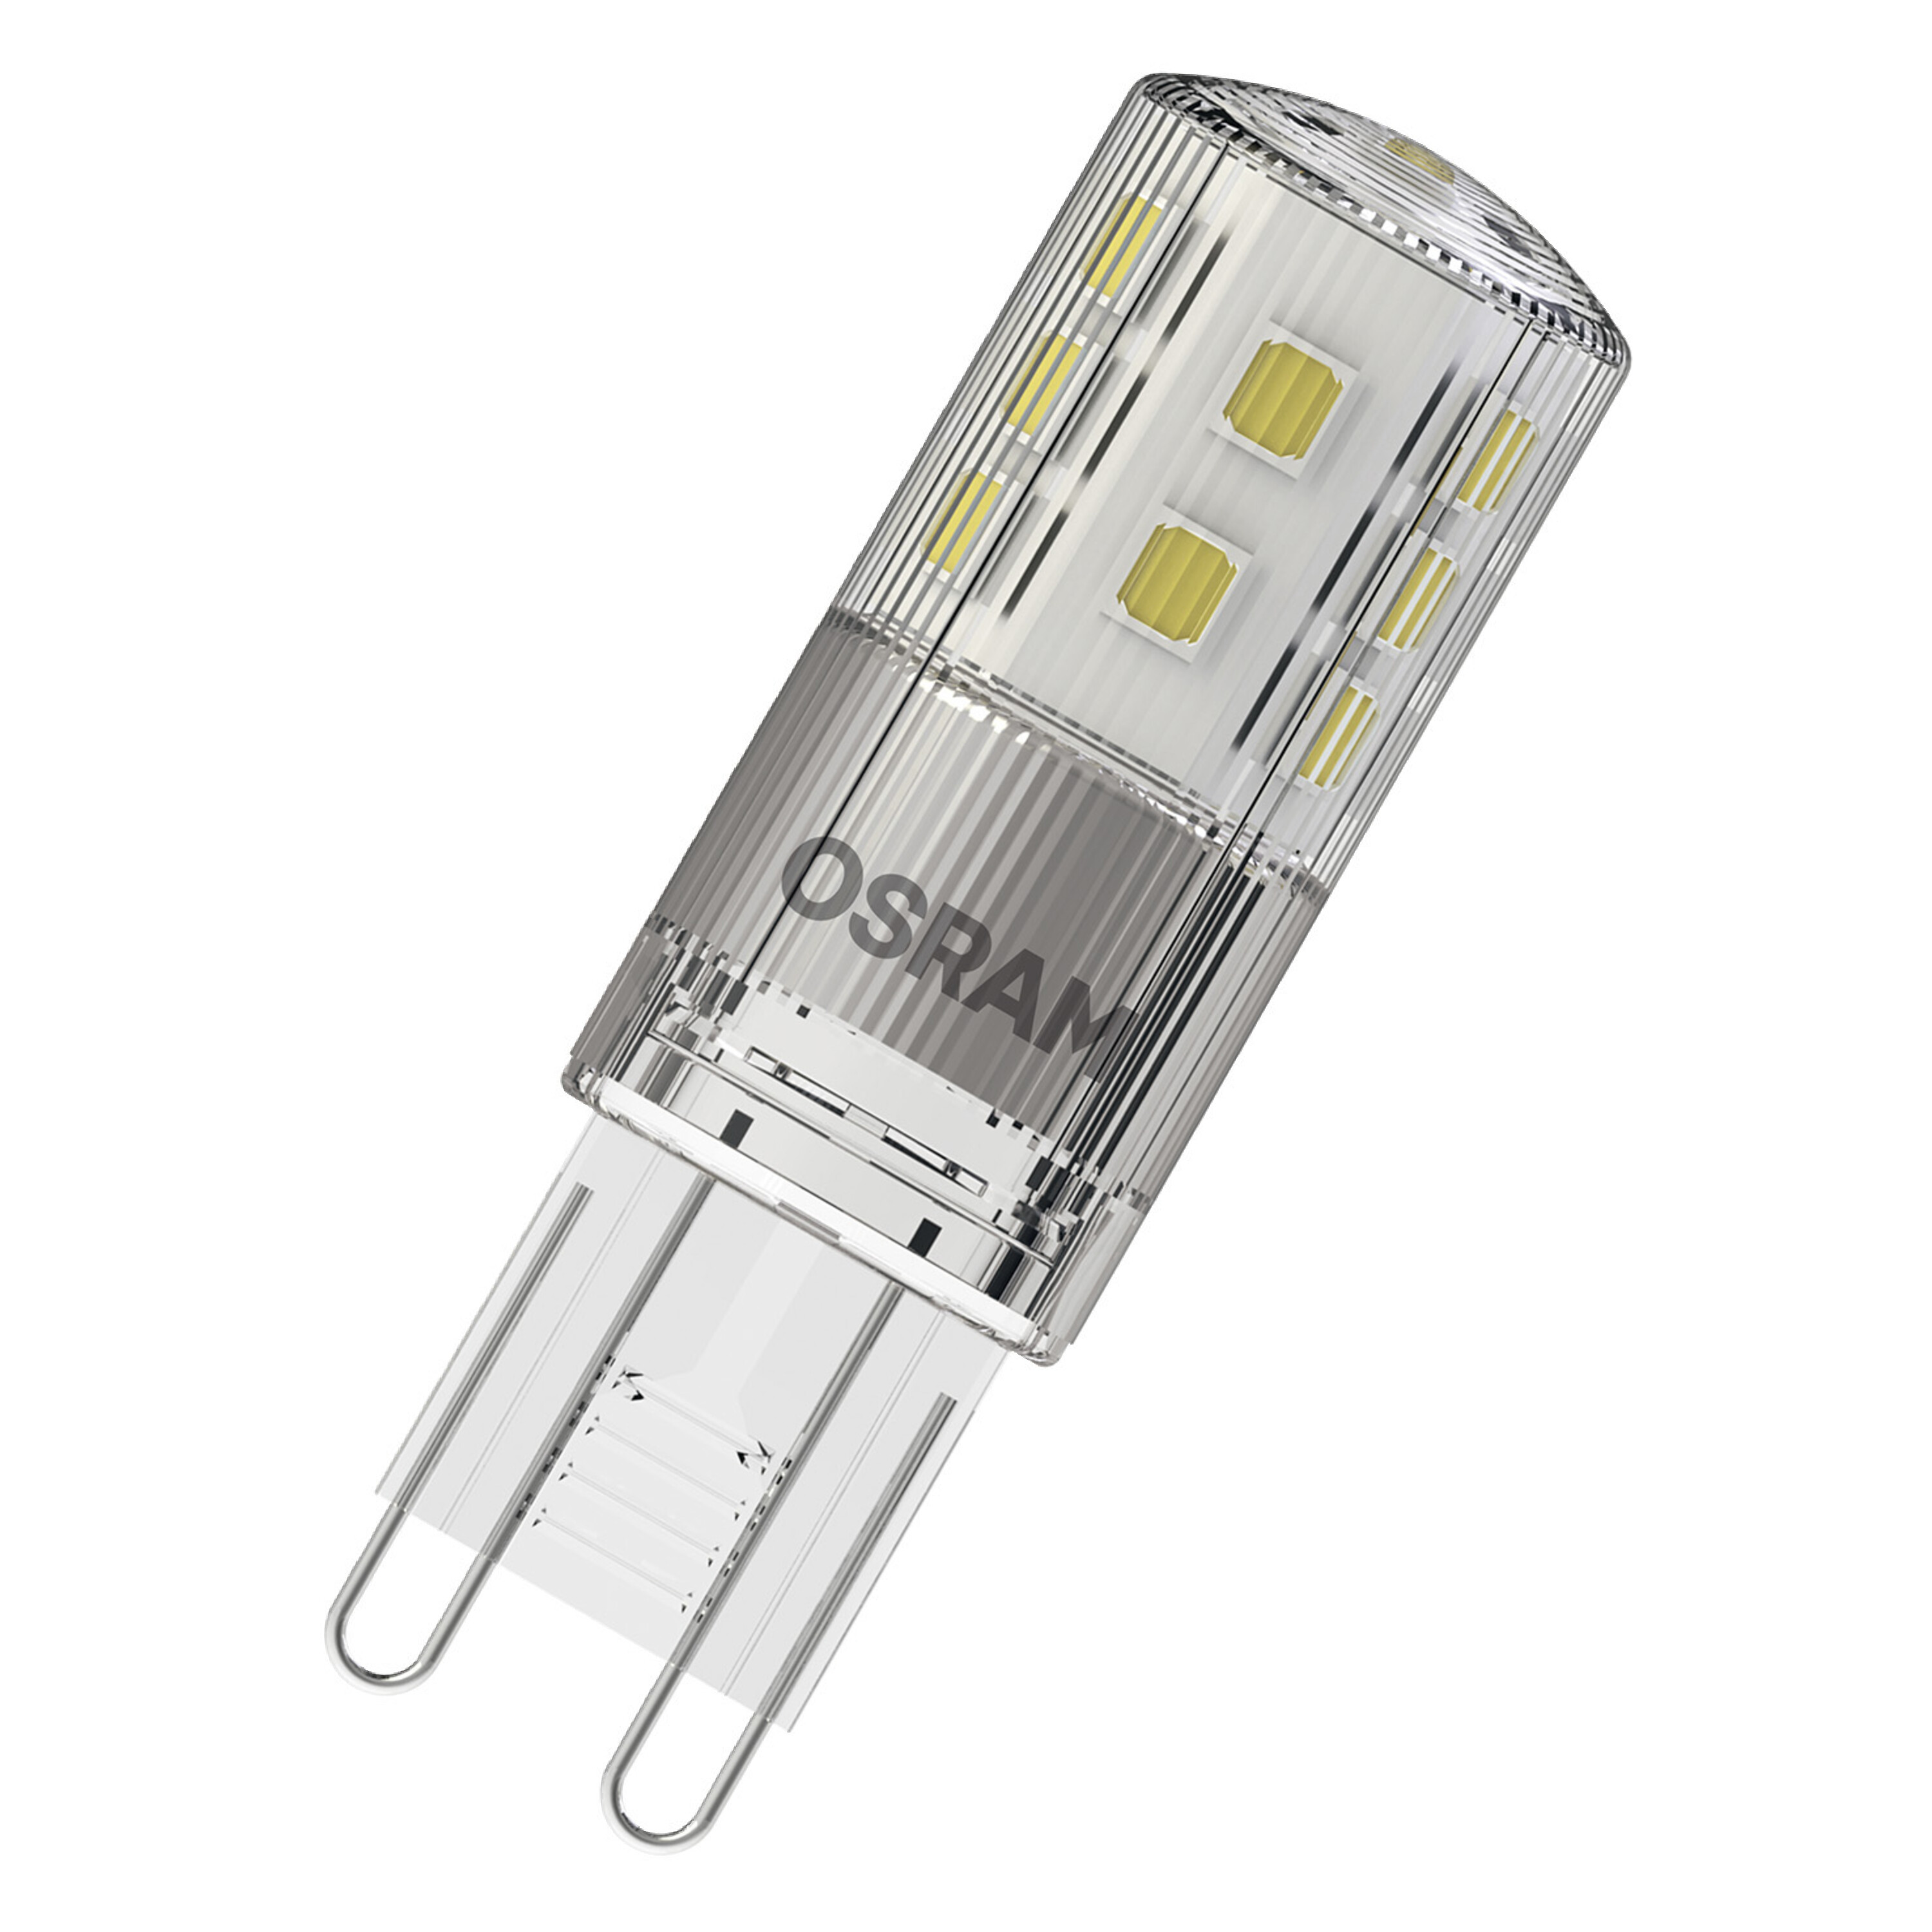 OSRAM  LED PIN G9 DIM 320 LED Lampe Warmweiß lumen